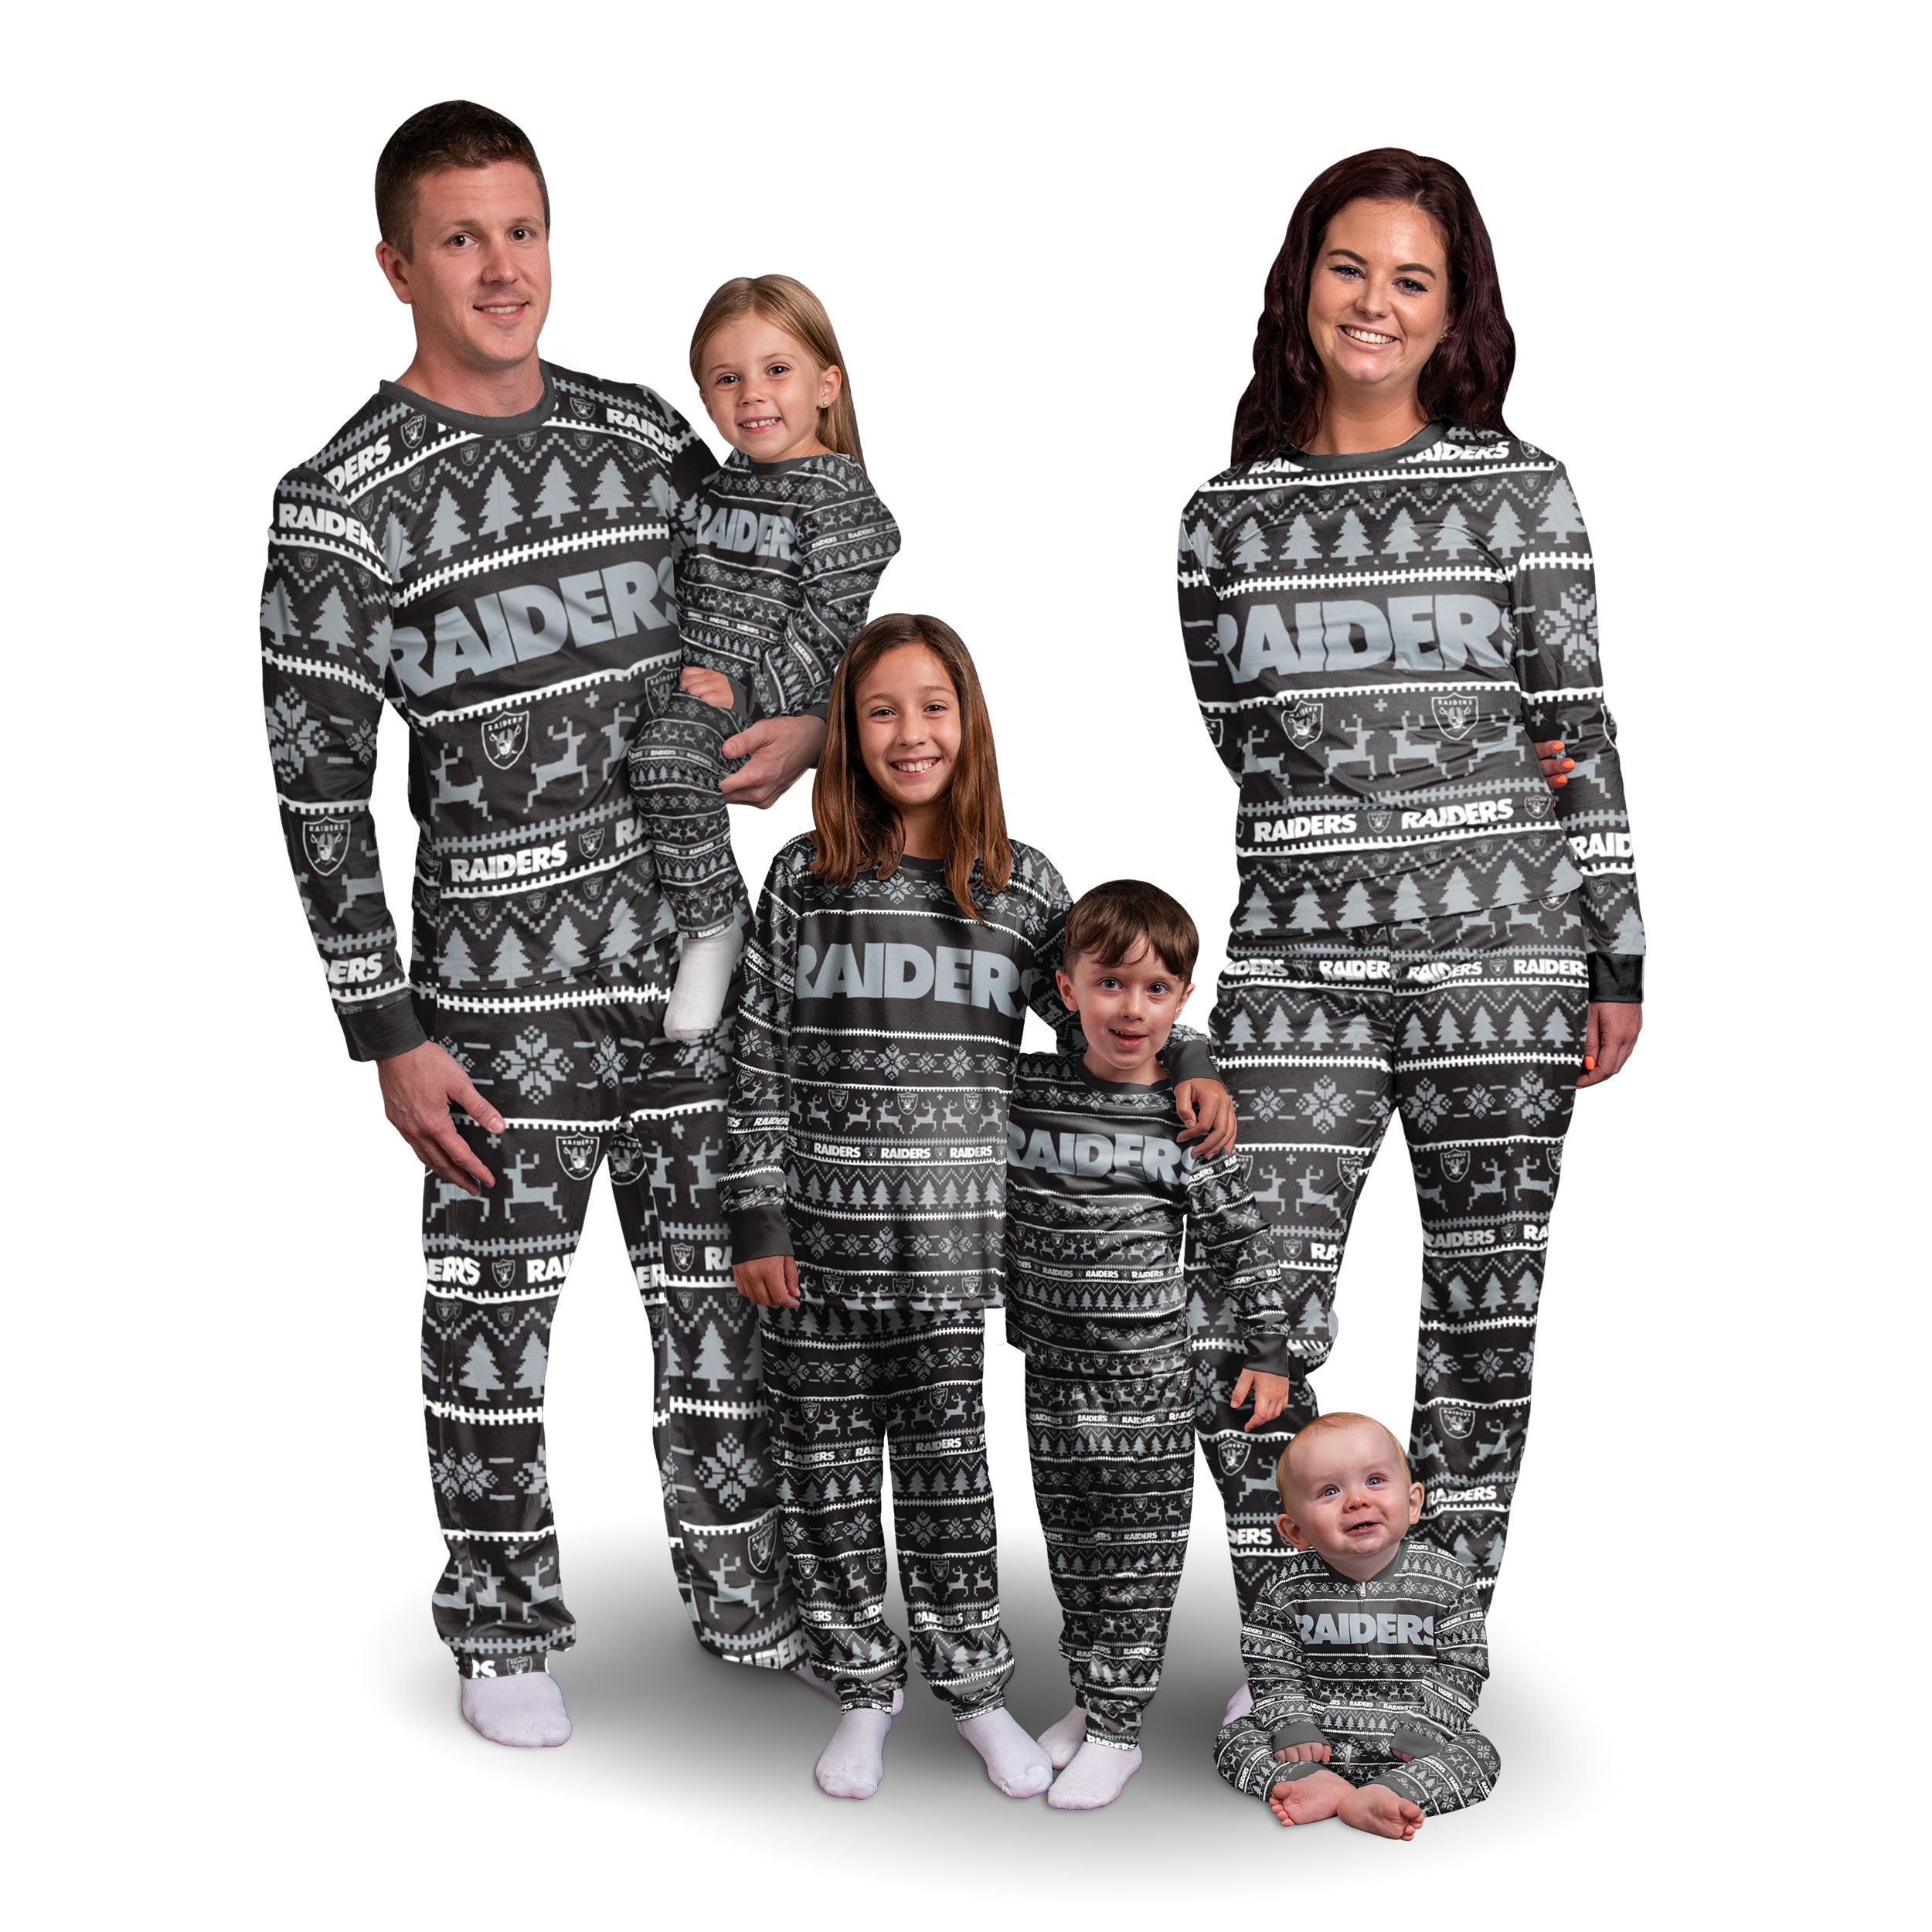 Las Vegas Raiders Team Custom Name Christmas Pajamas For Fans - Banantees